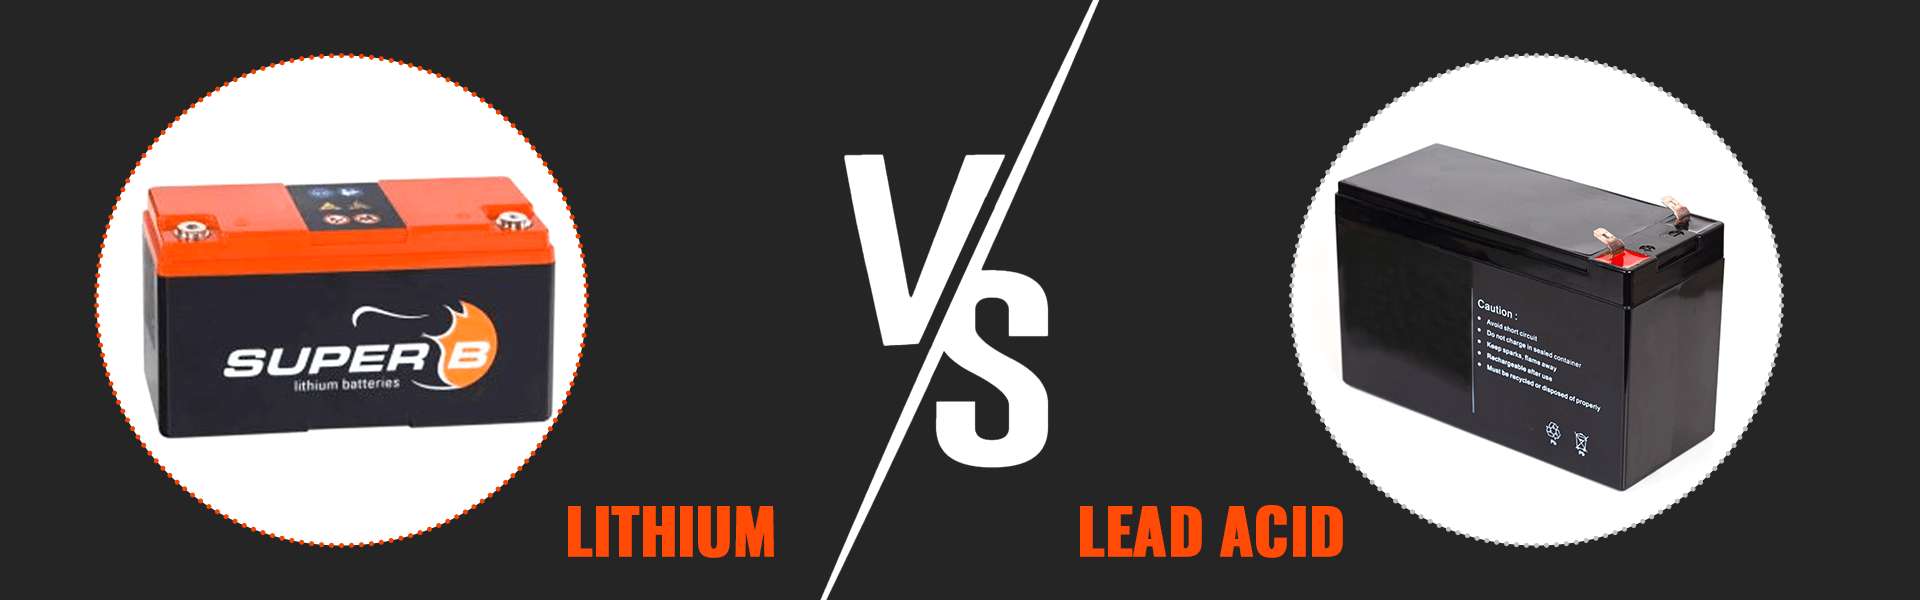 lithium-battery-vs-lead-acid-battery